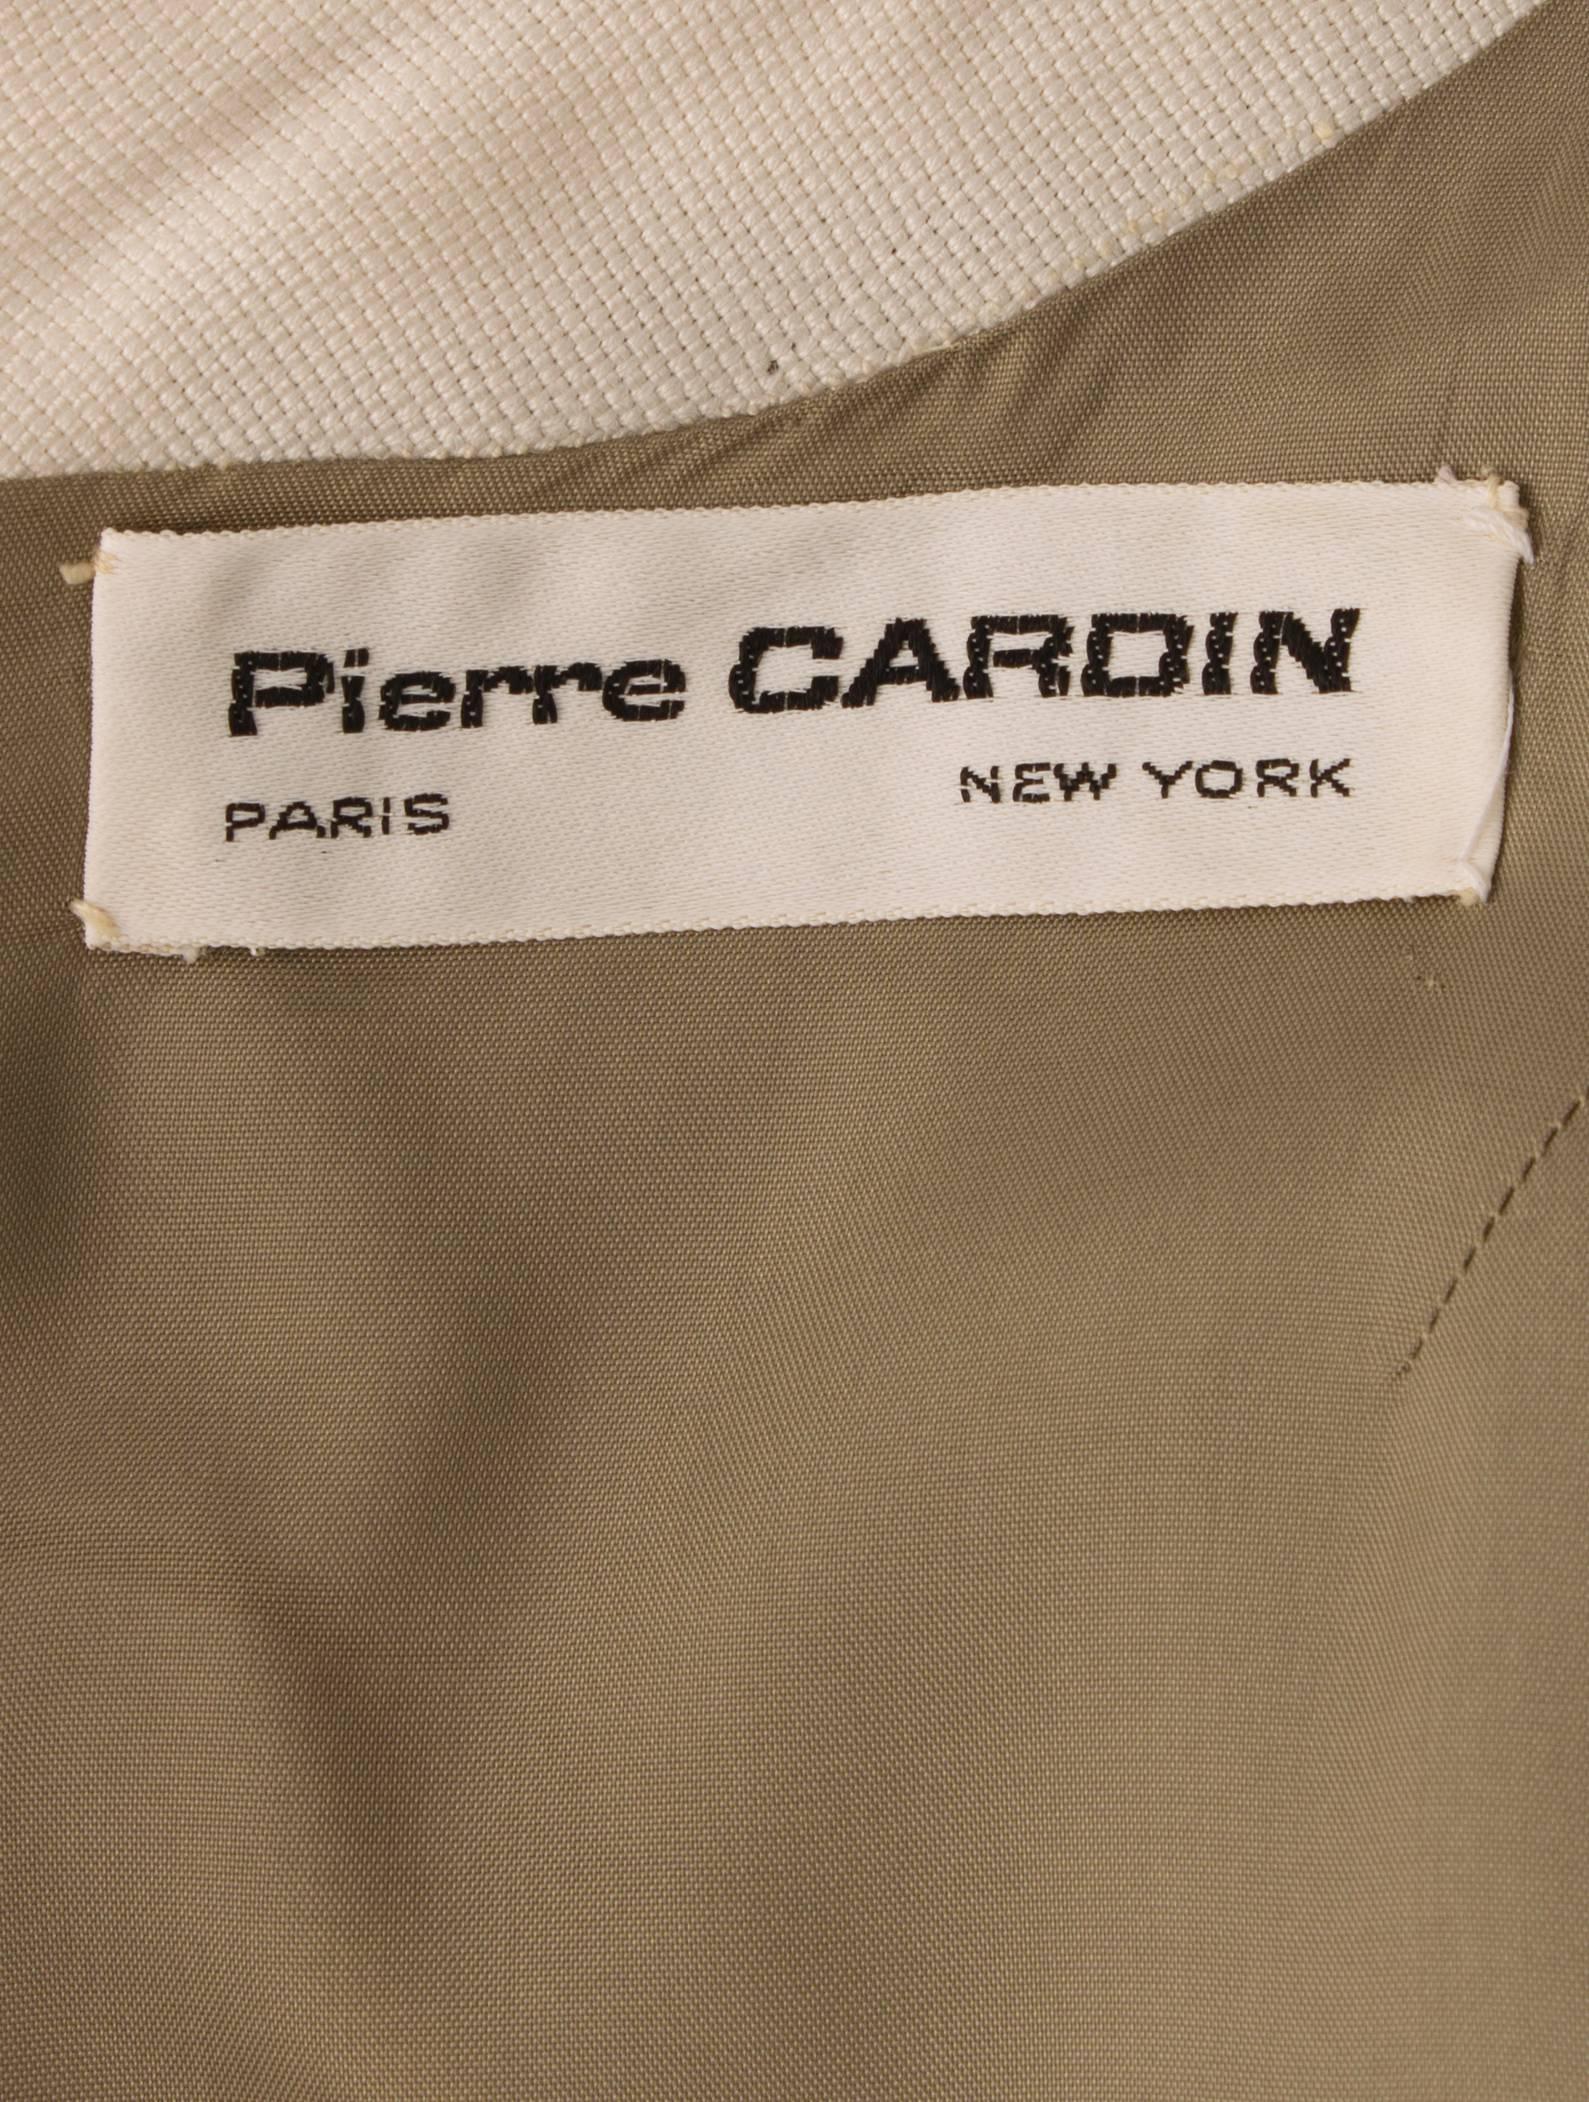 Pierre Cardin brown linen dress, circa 1965 For Sale 1